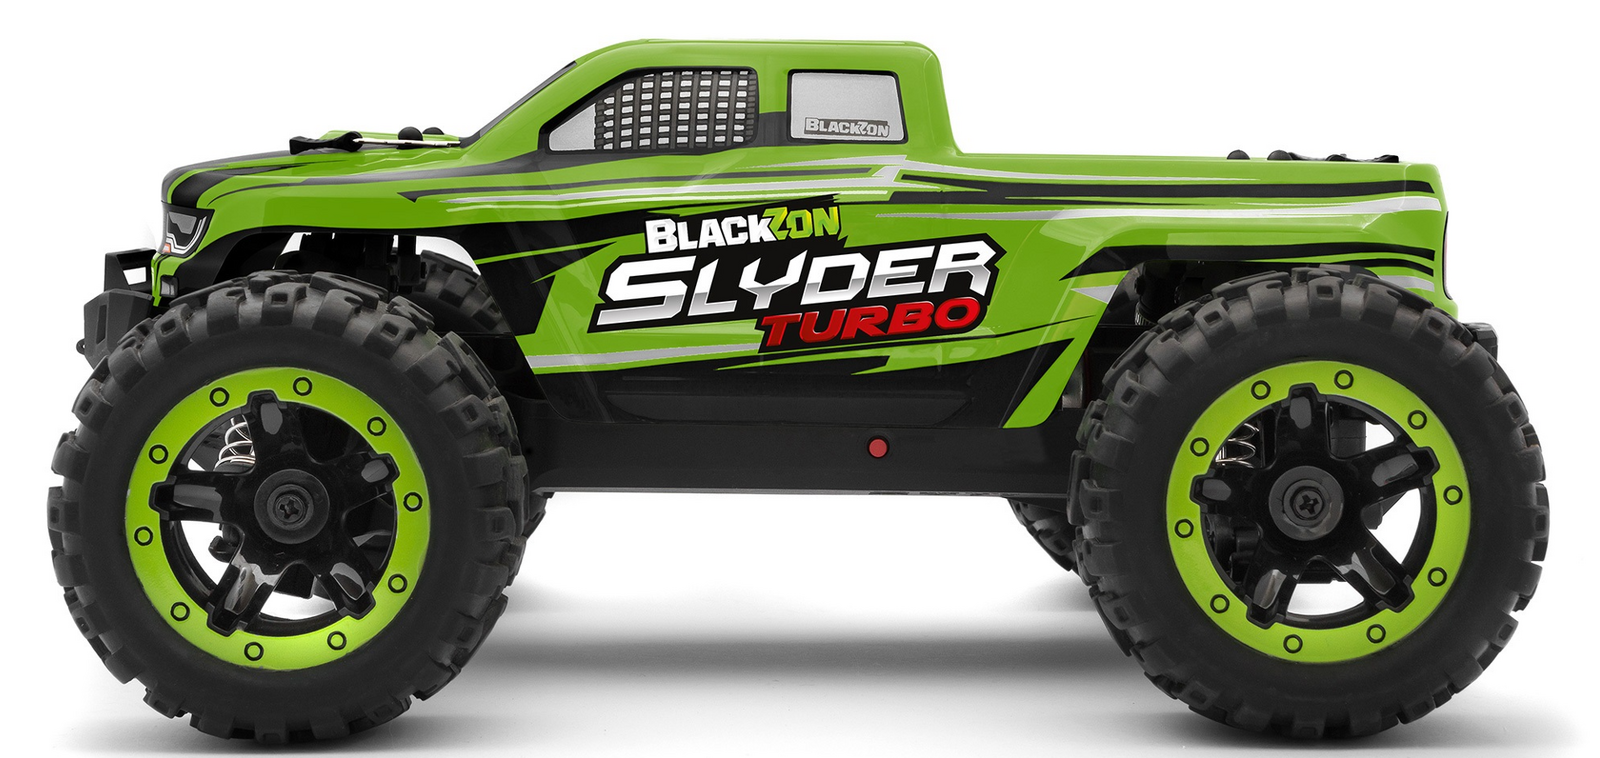 BlackZon 1/16 Slyder MT Turbo 4WD 2S Brushless - Green - [Sunshine-Coast] - Blackzon - [RC-Car] - [Scale-Model]